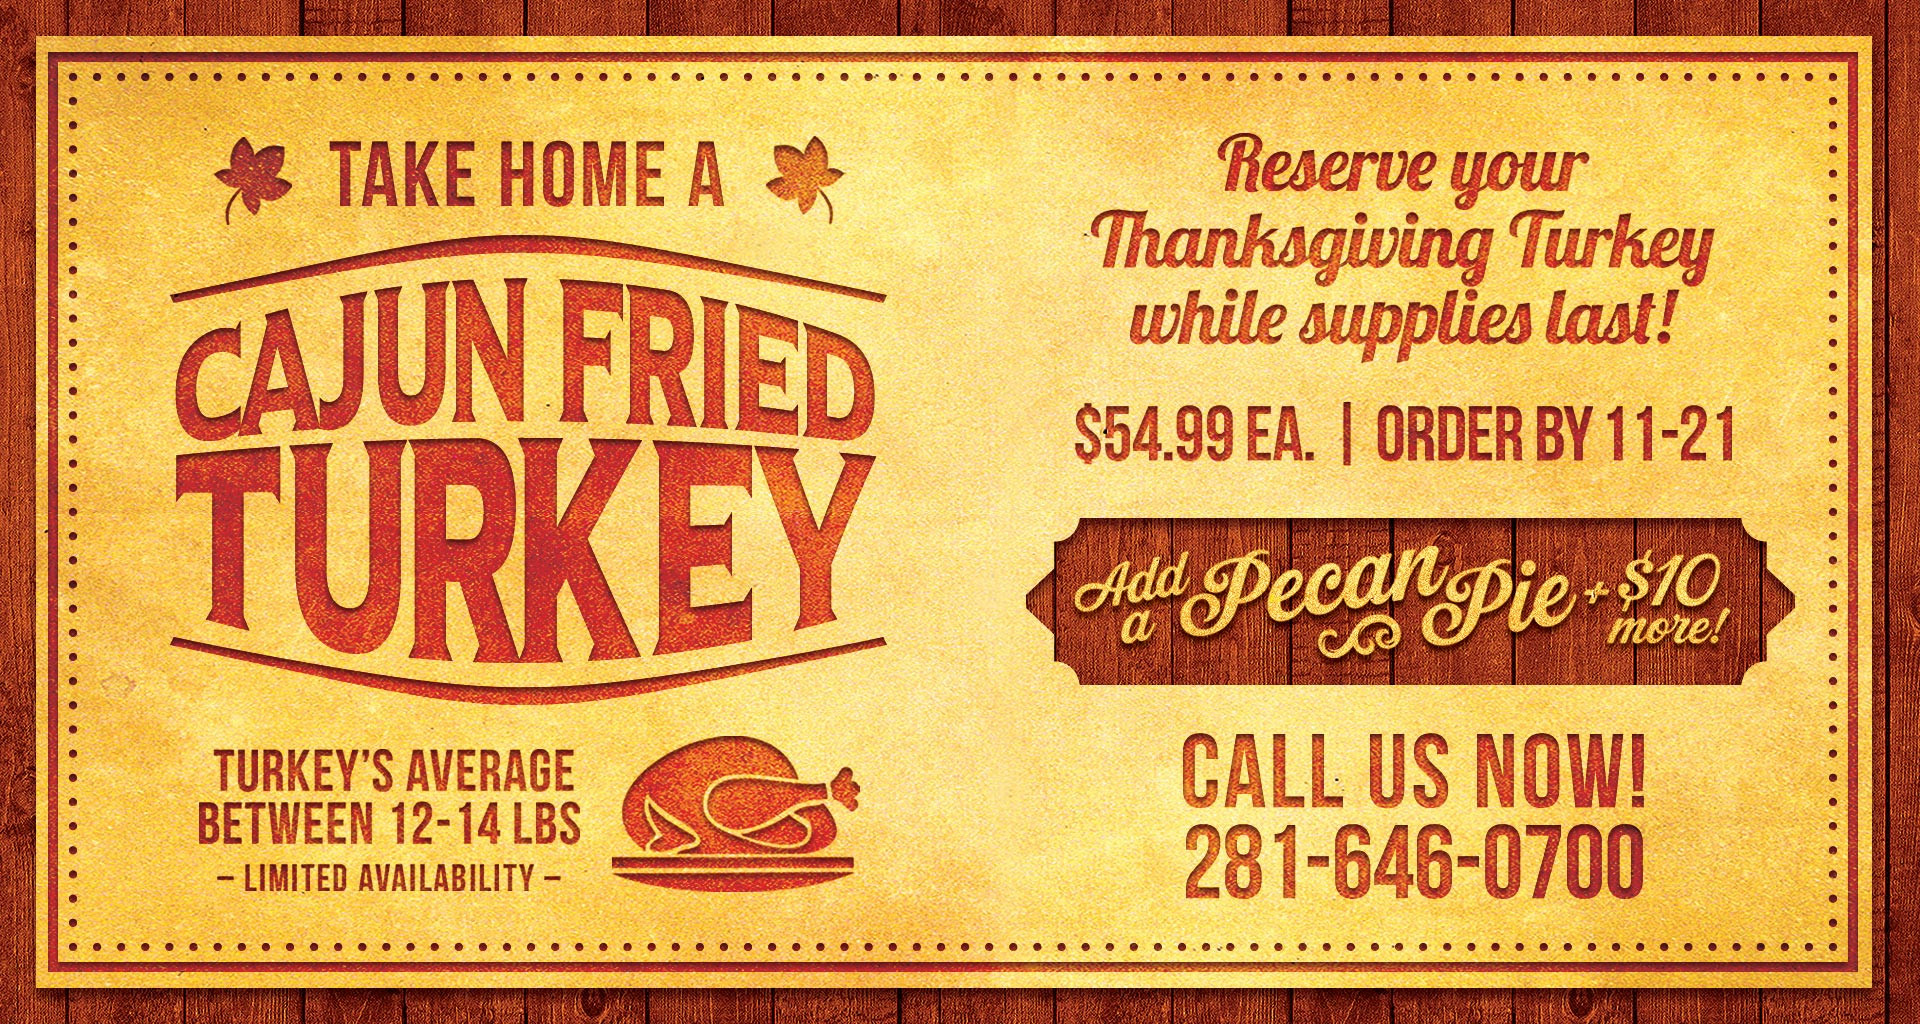 Order Thanksgiving Turkey
 Take Home a Cajun Fried Turkey Orleans Seafood Kitchen